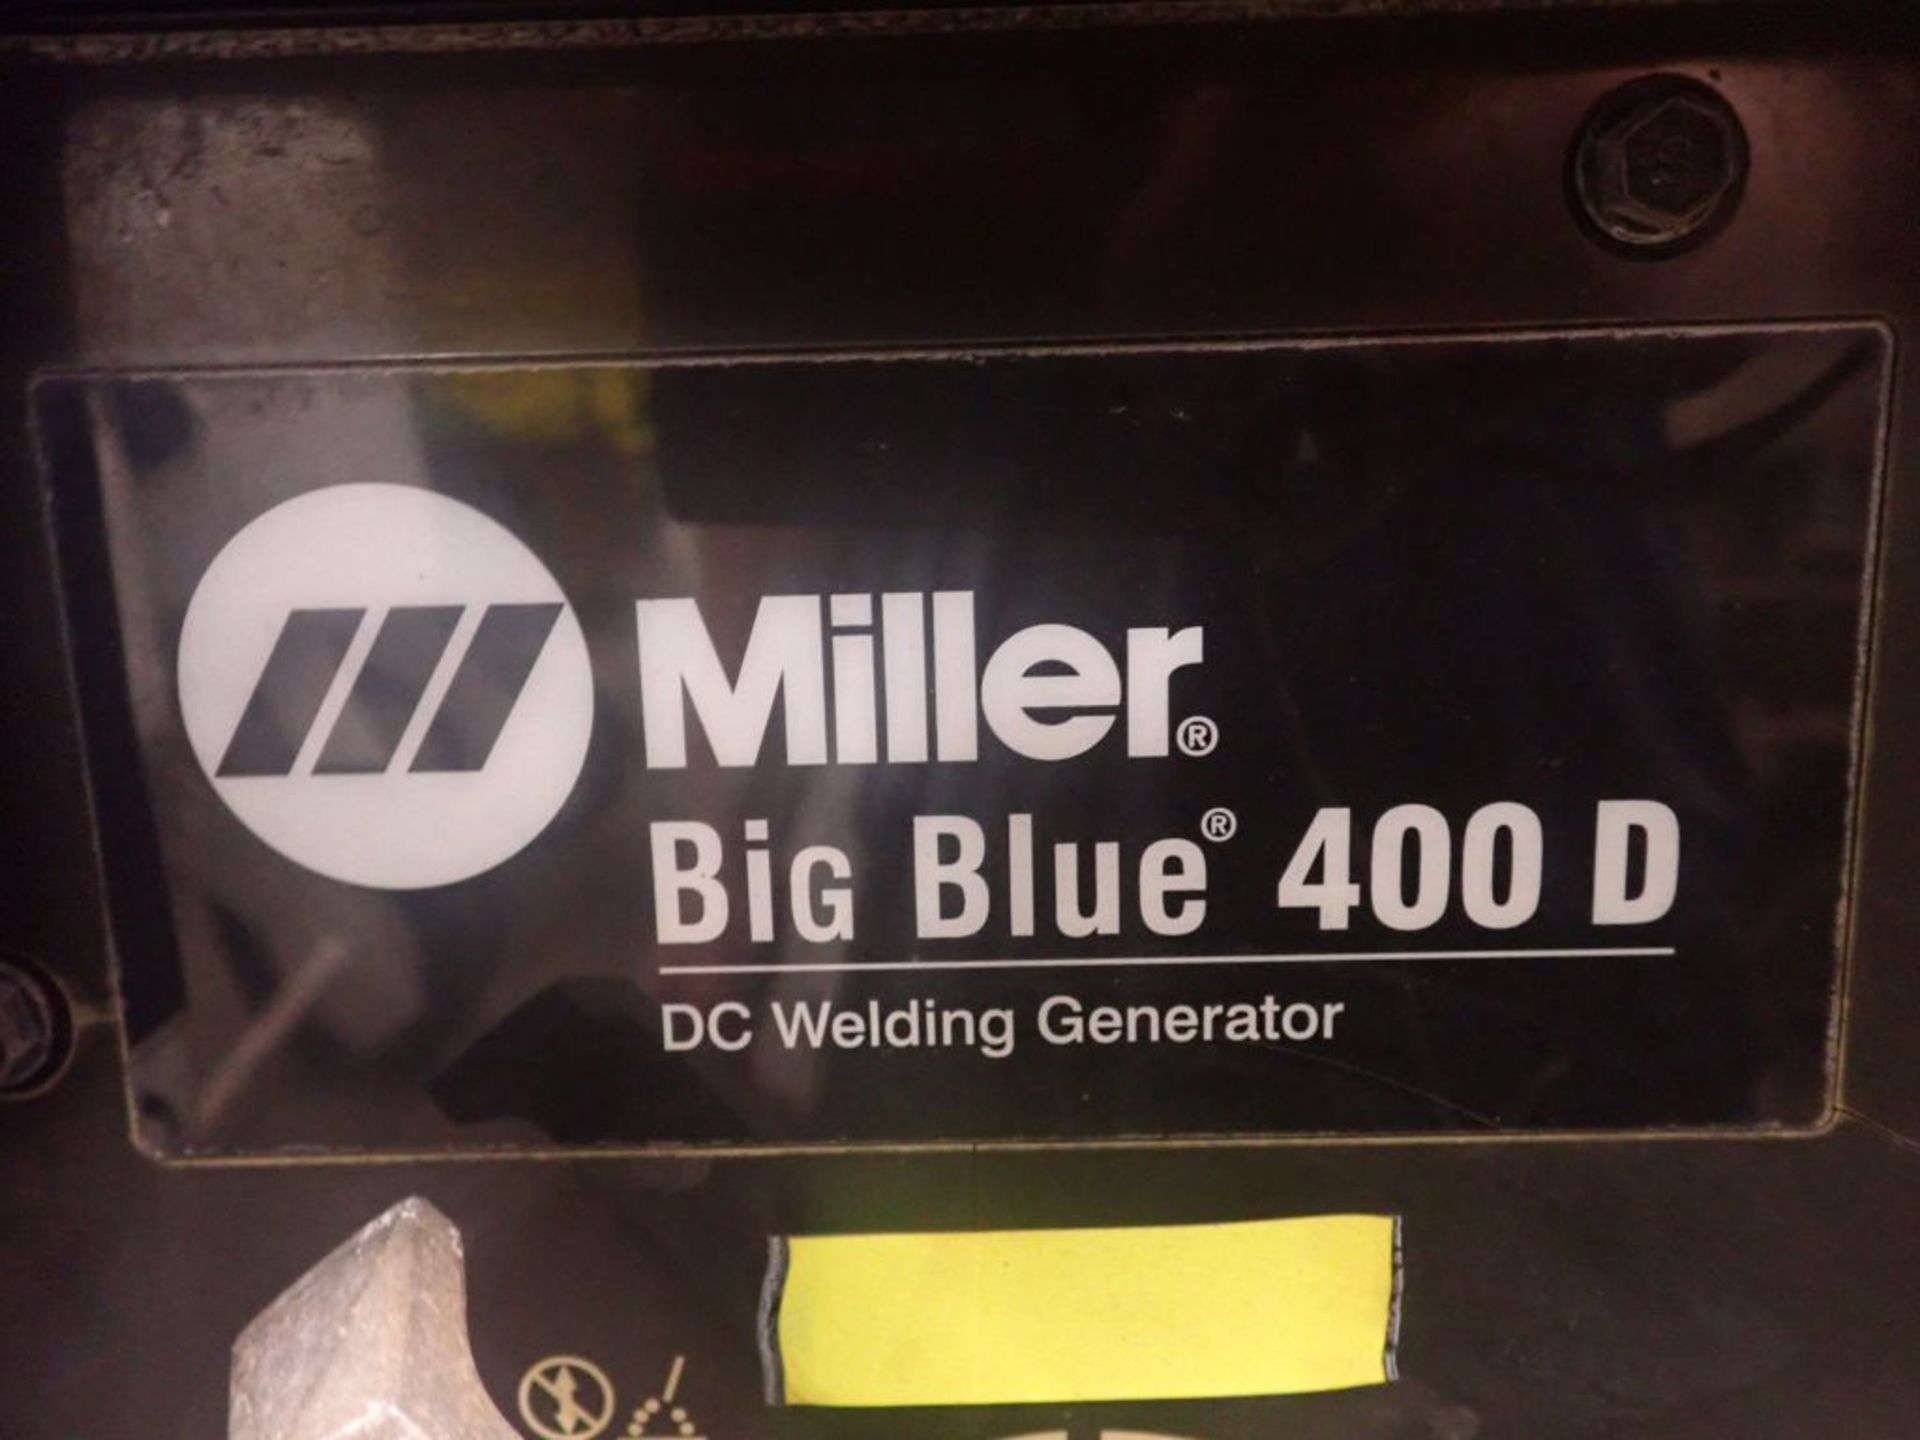 Miller Big Blue 400 D DC Welding Generator | Stock No. 907327; Engine Driven - Image 5 of 13